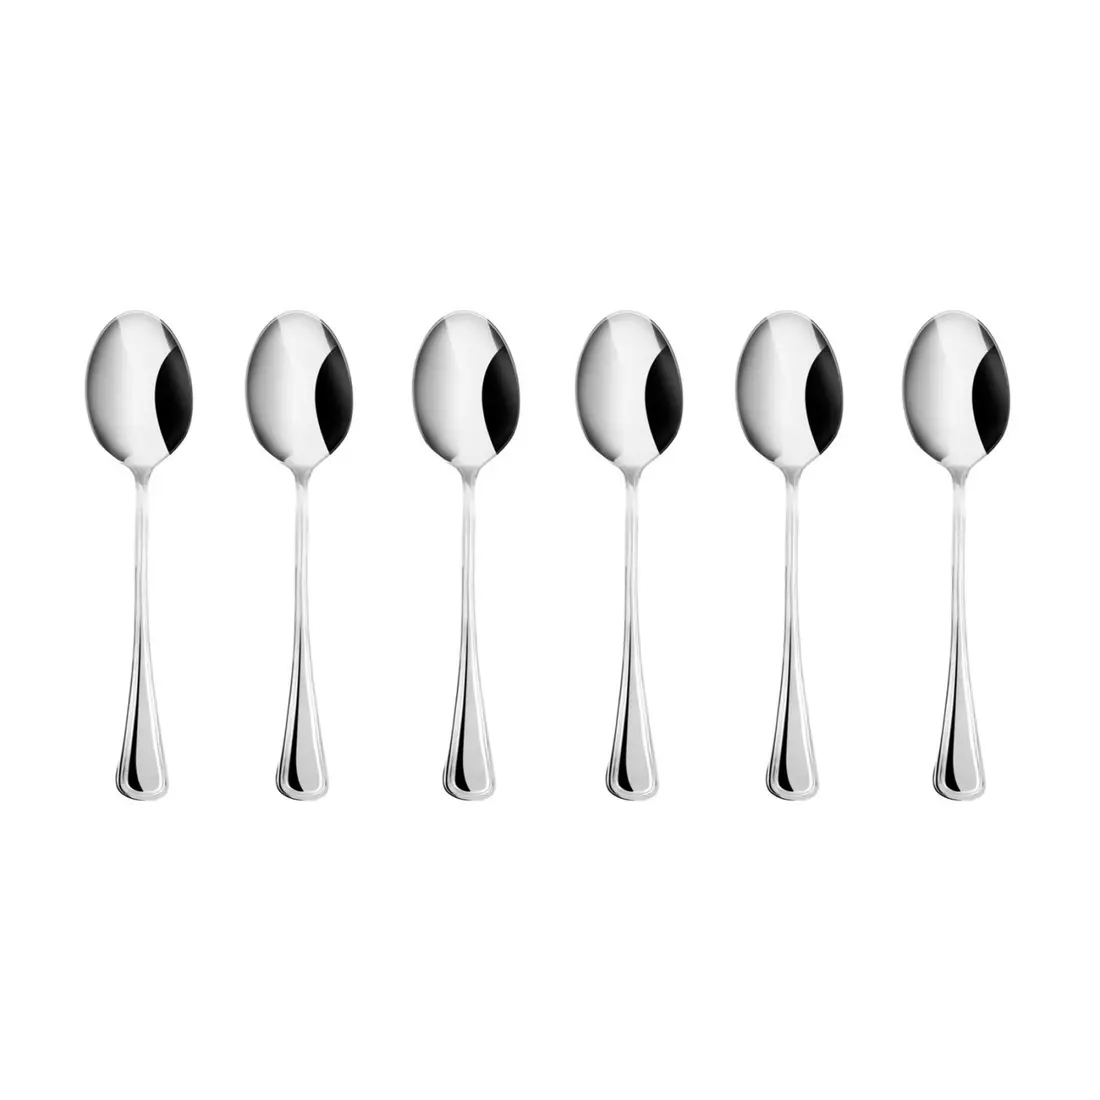 KULIG LONDON set of 6 tea spoons, silver